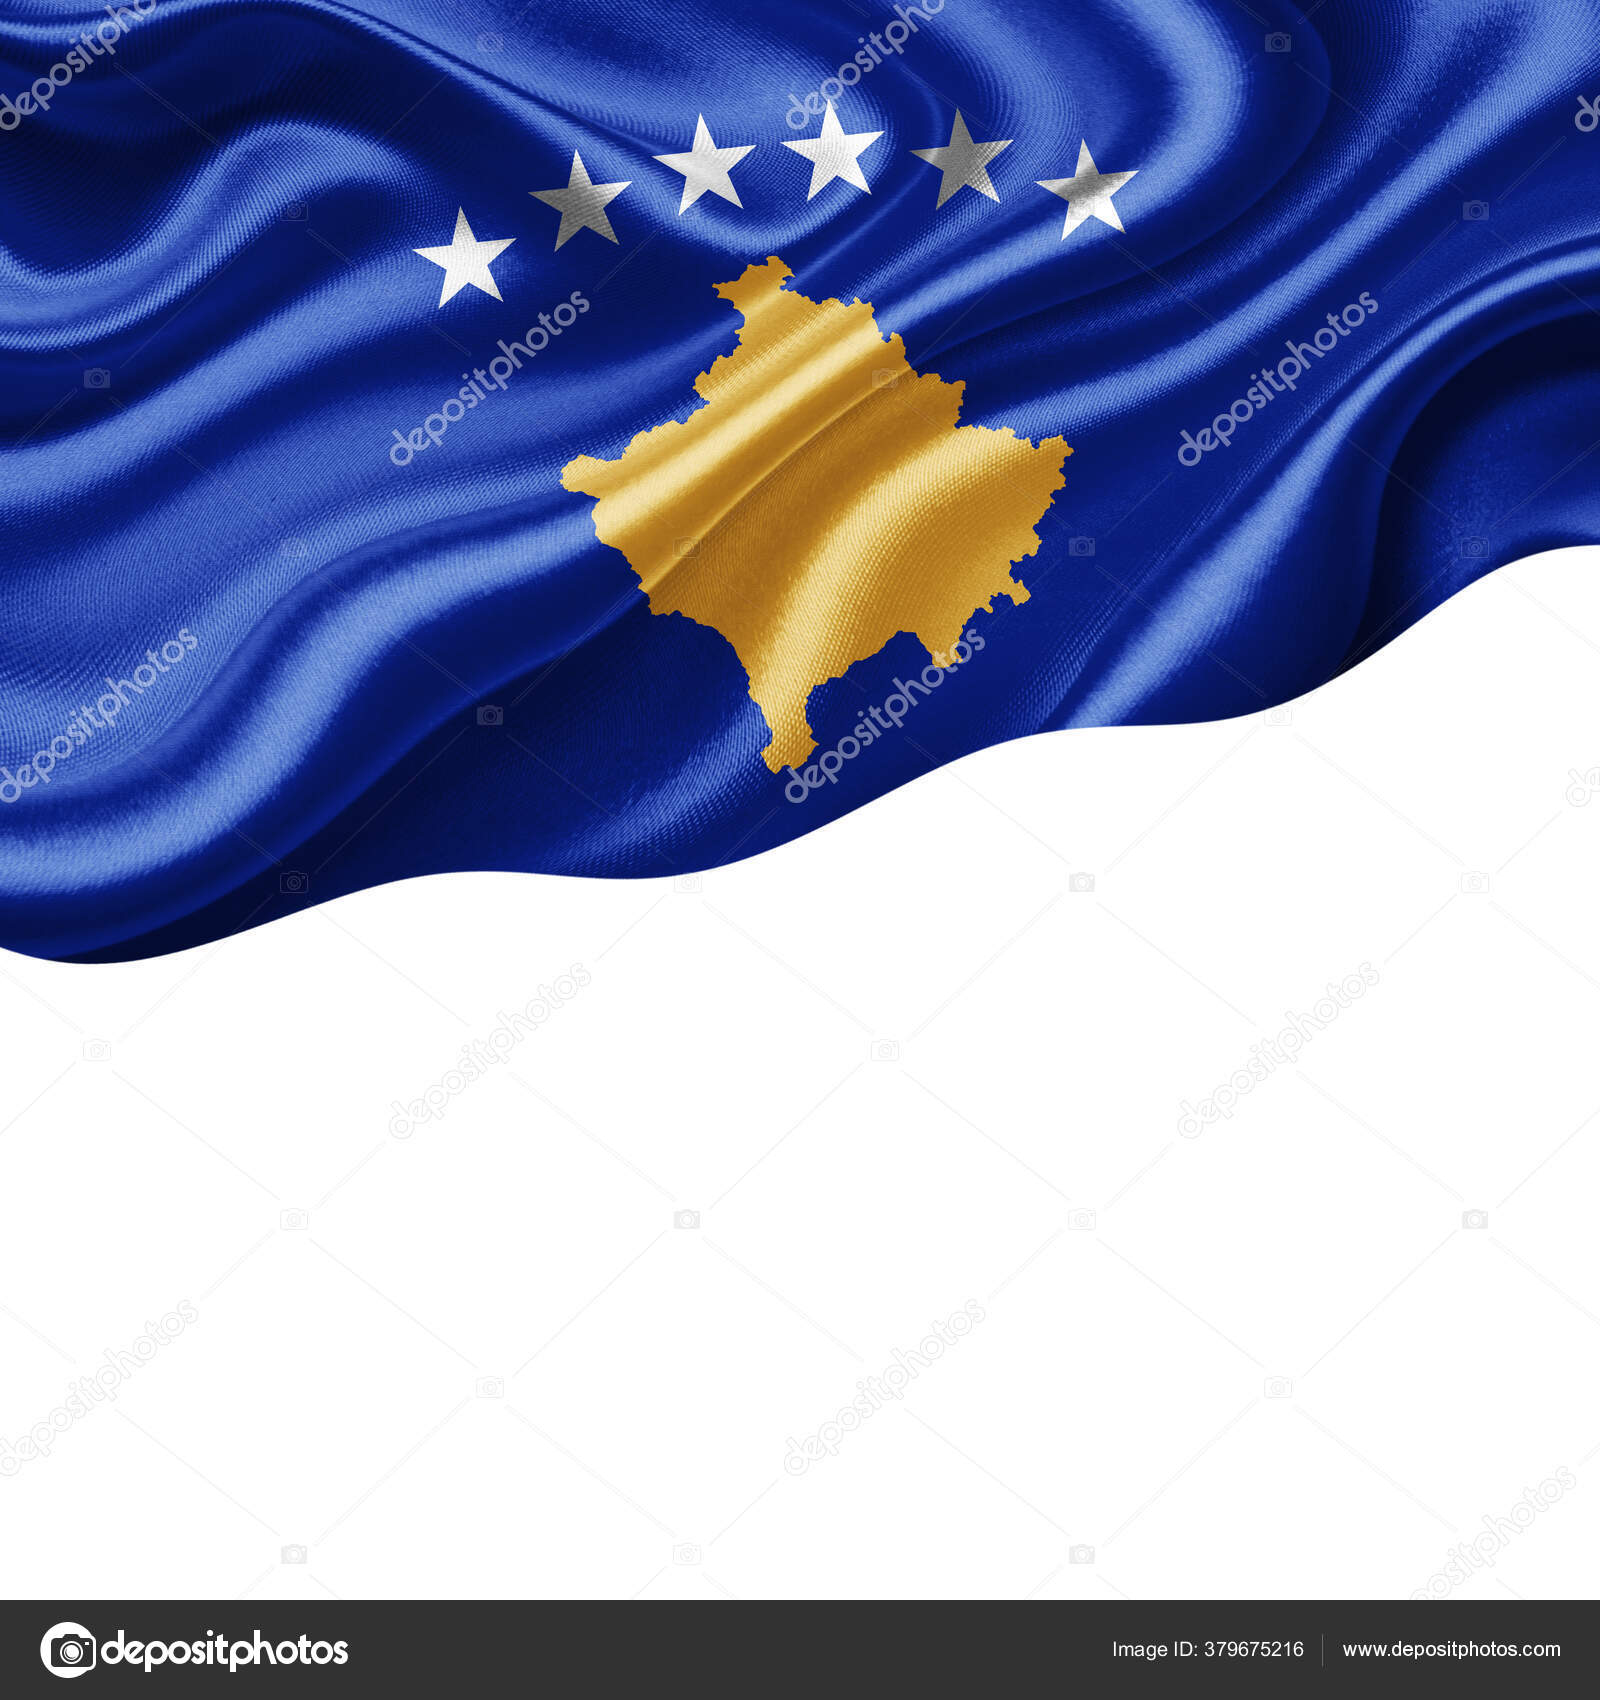 Kosovo flag : photos, images et illustrations